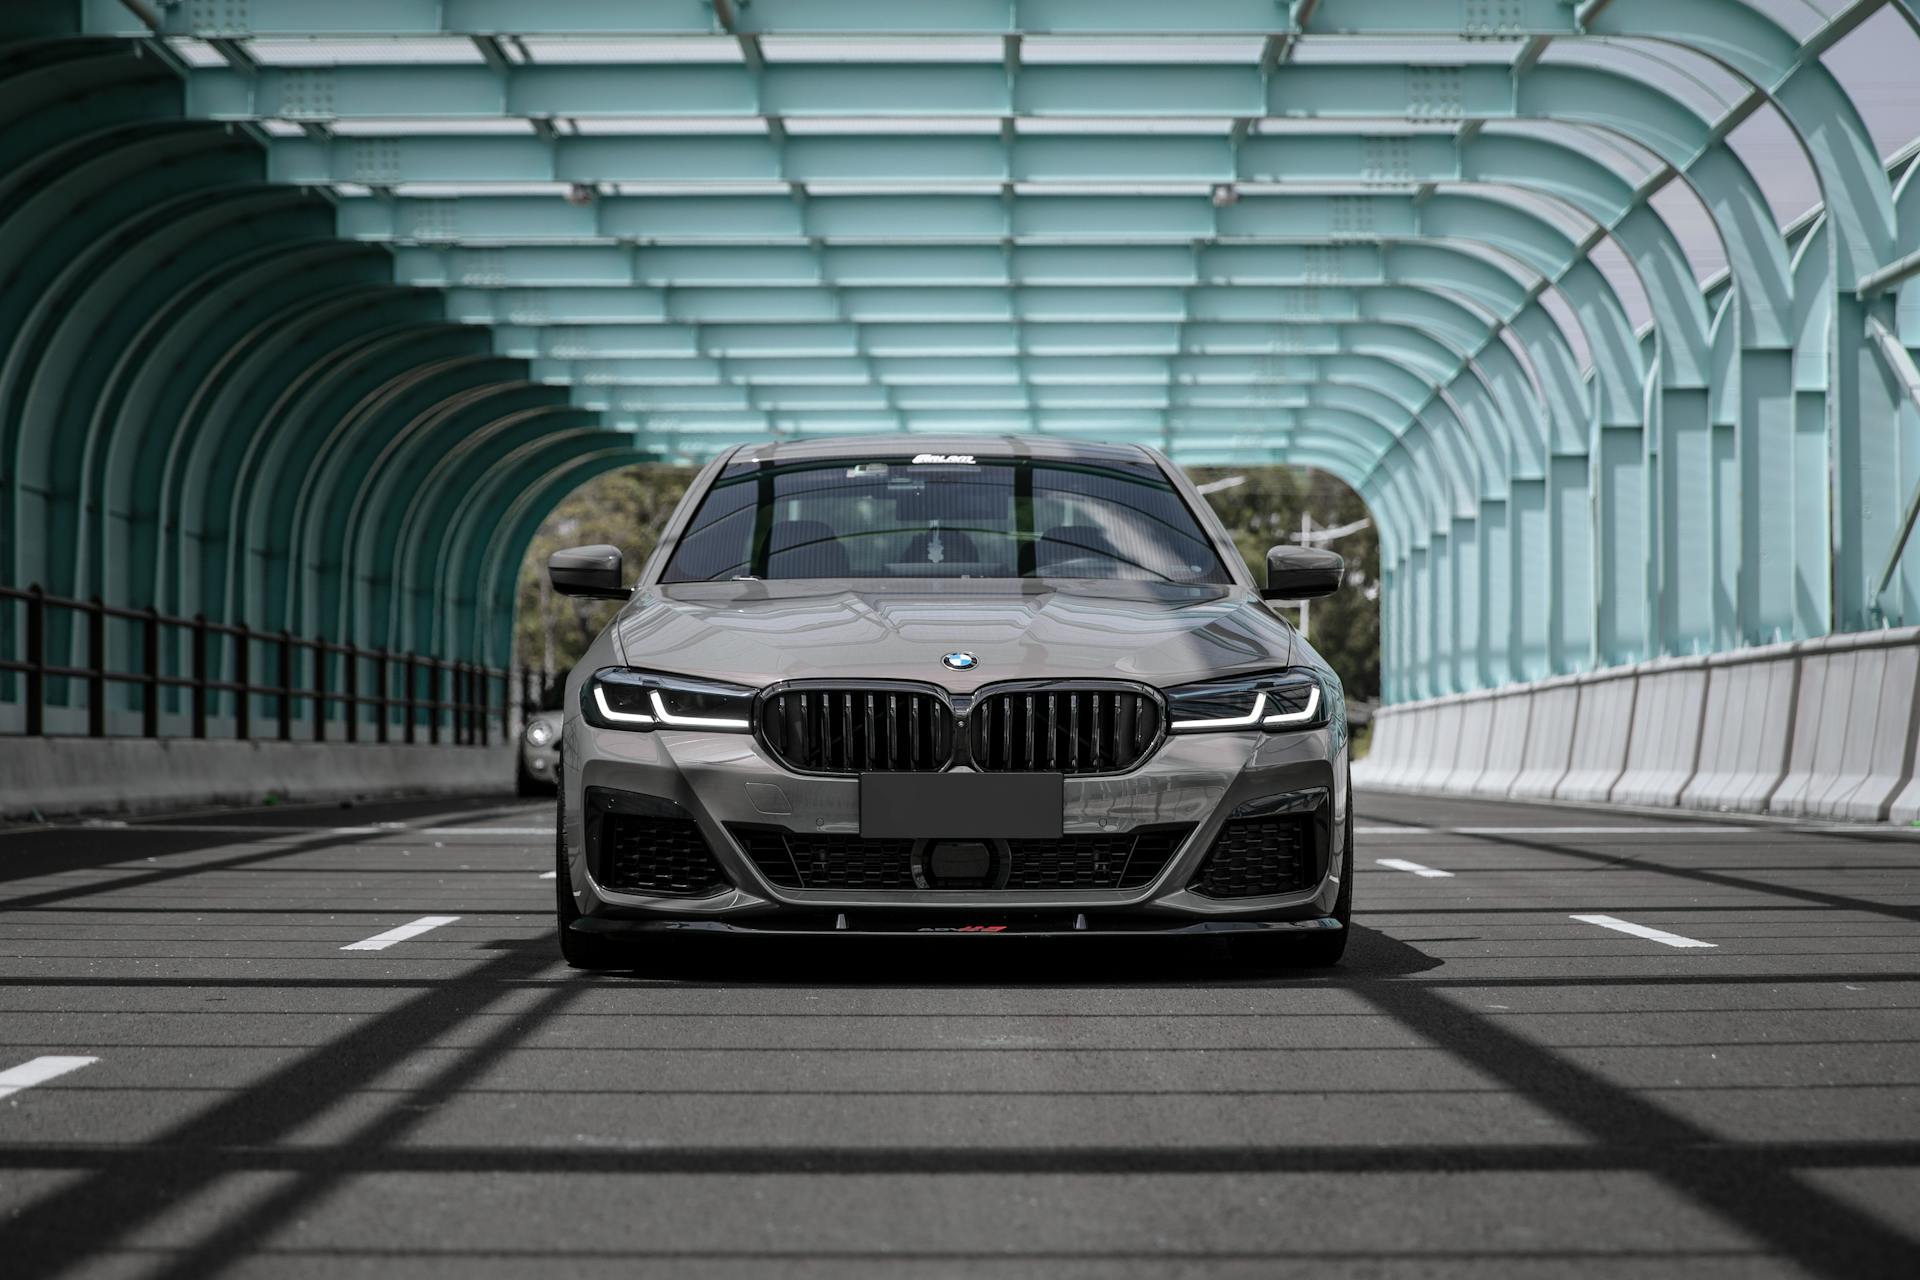 A BMW sedan | Source: Pexels